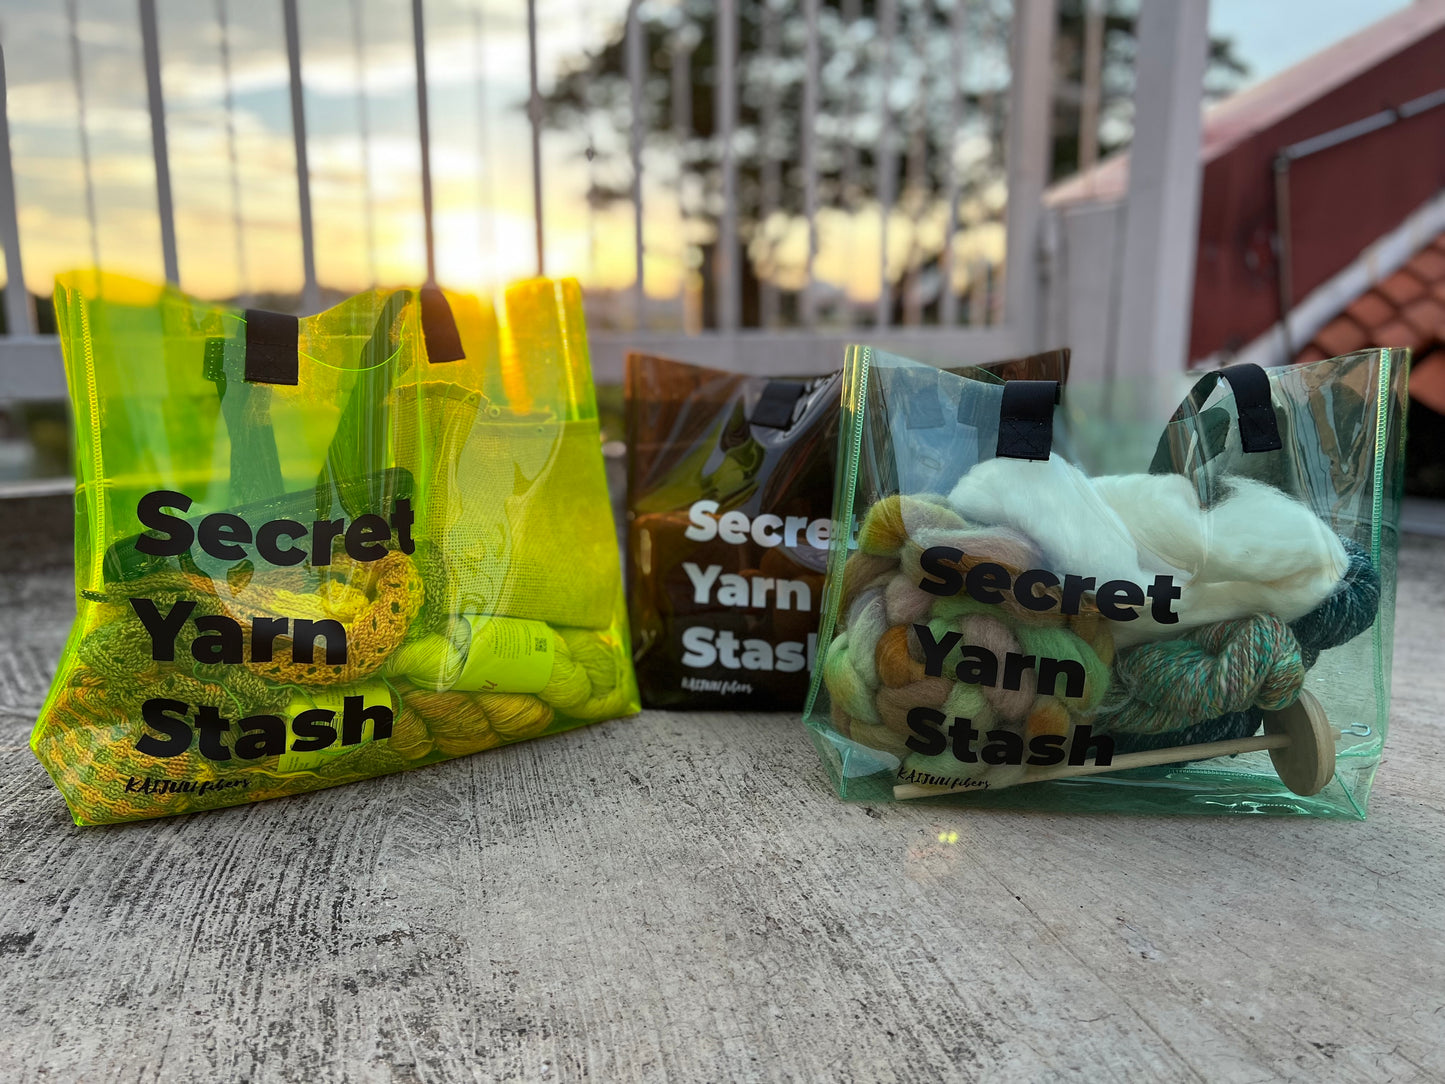 Secret Yarn Stash Jelly Tote Bag (L Size)